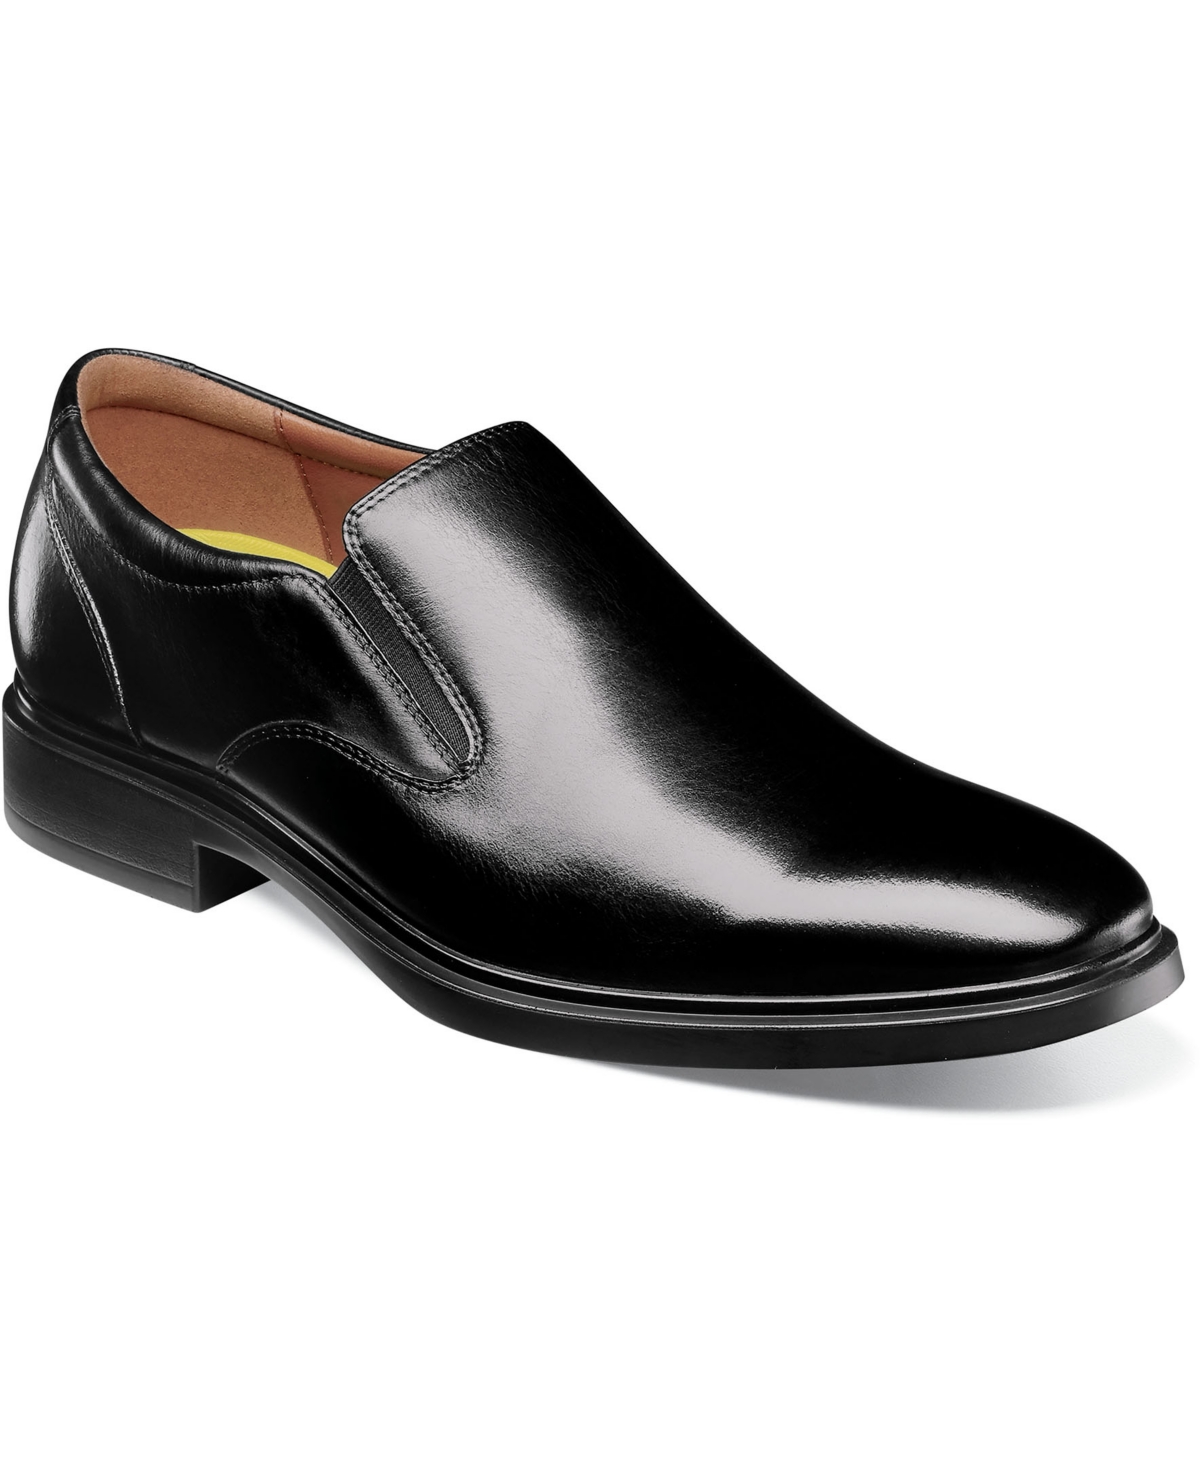 Men's Forecast Water Resistant Plain Toe Slip On Shoes - Black